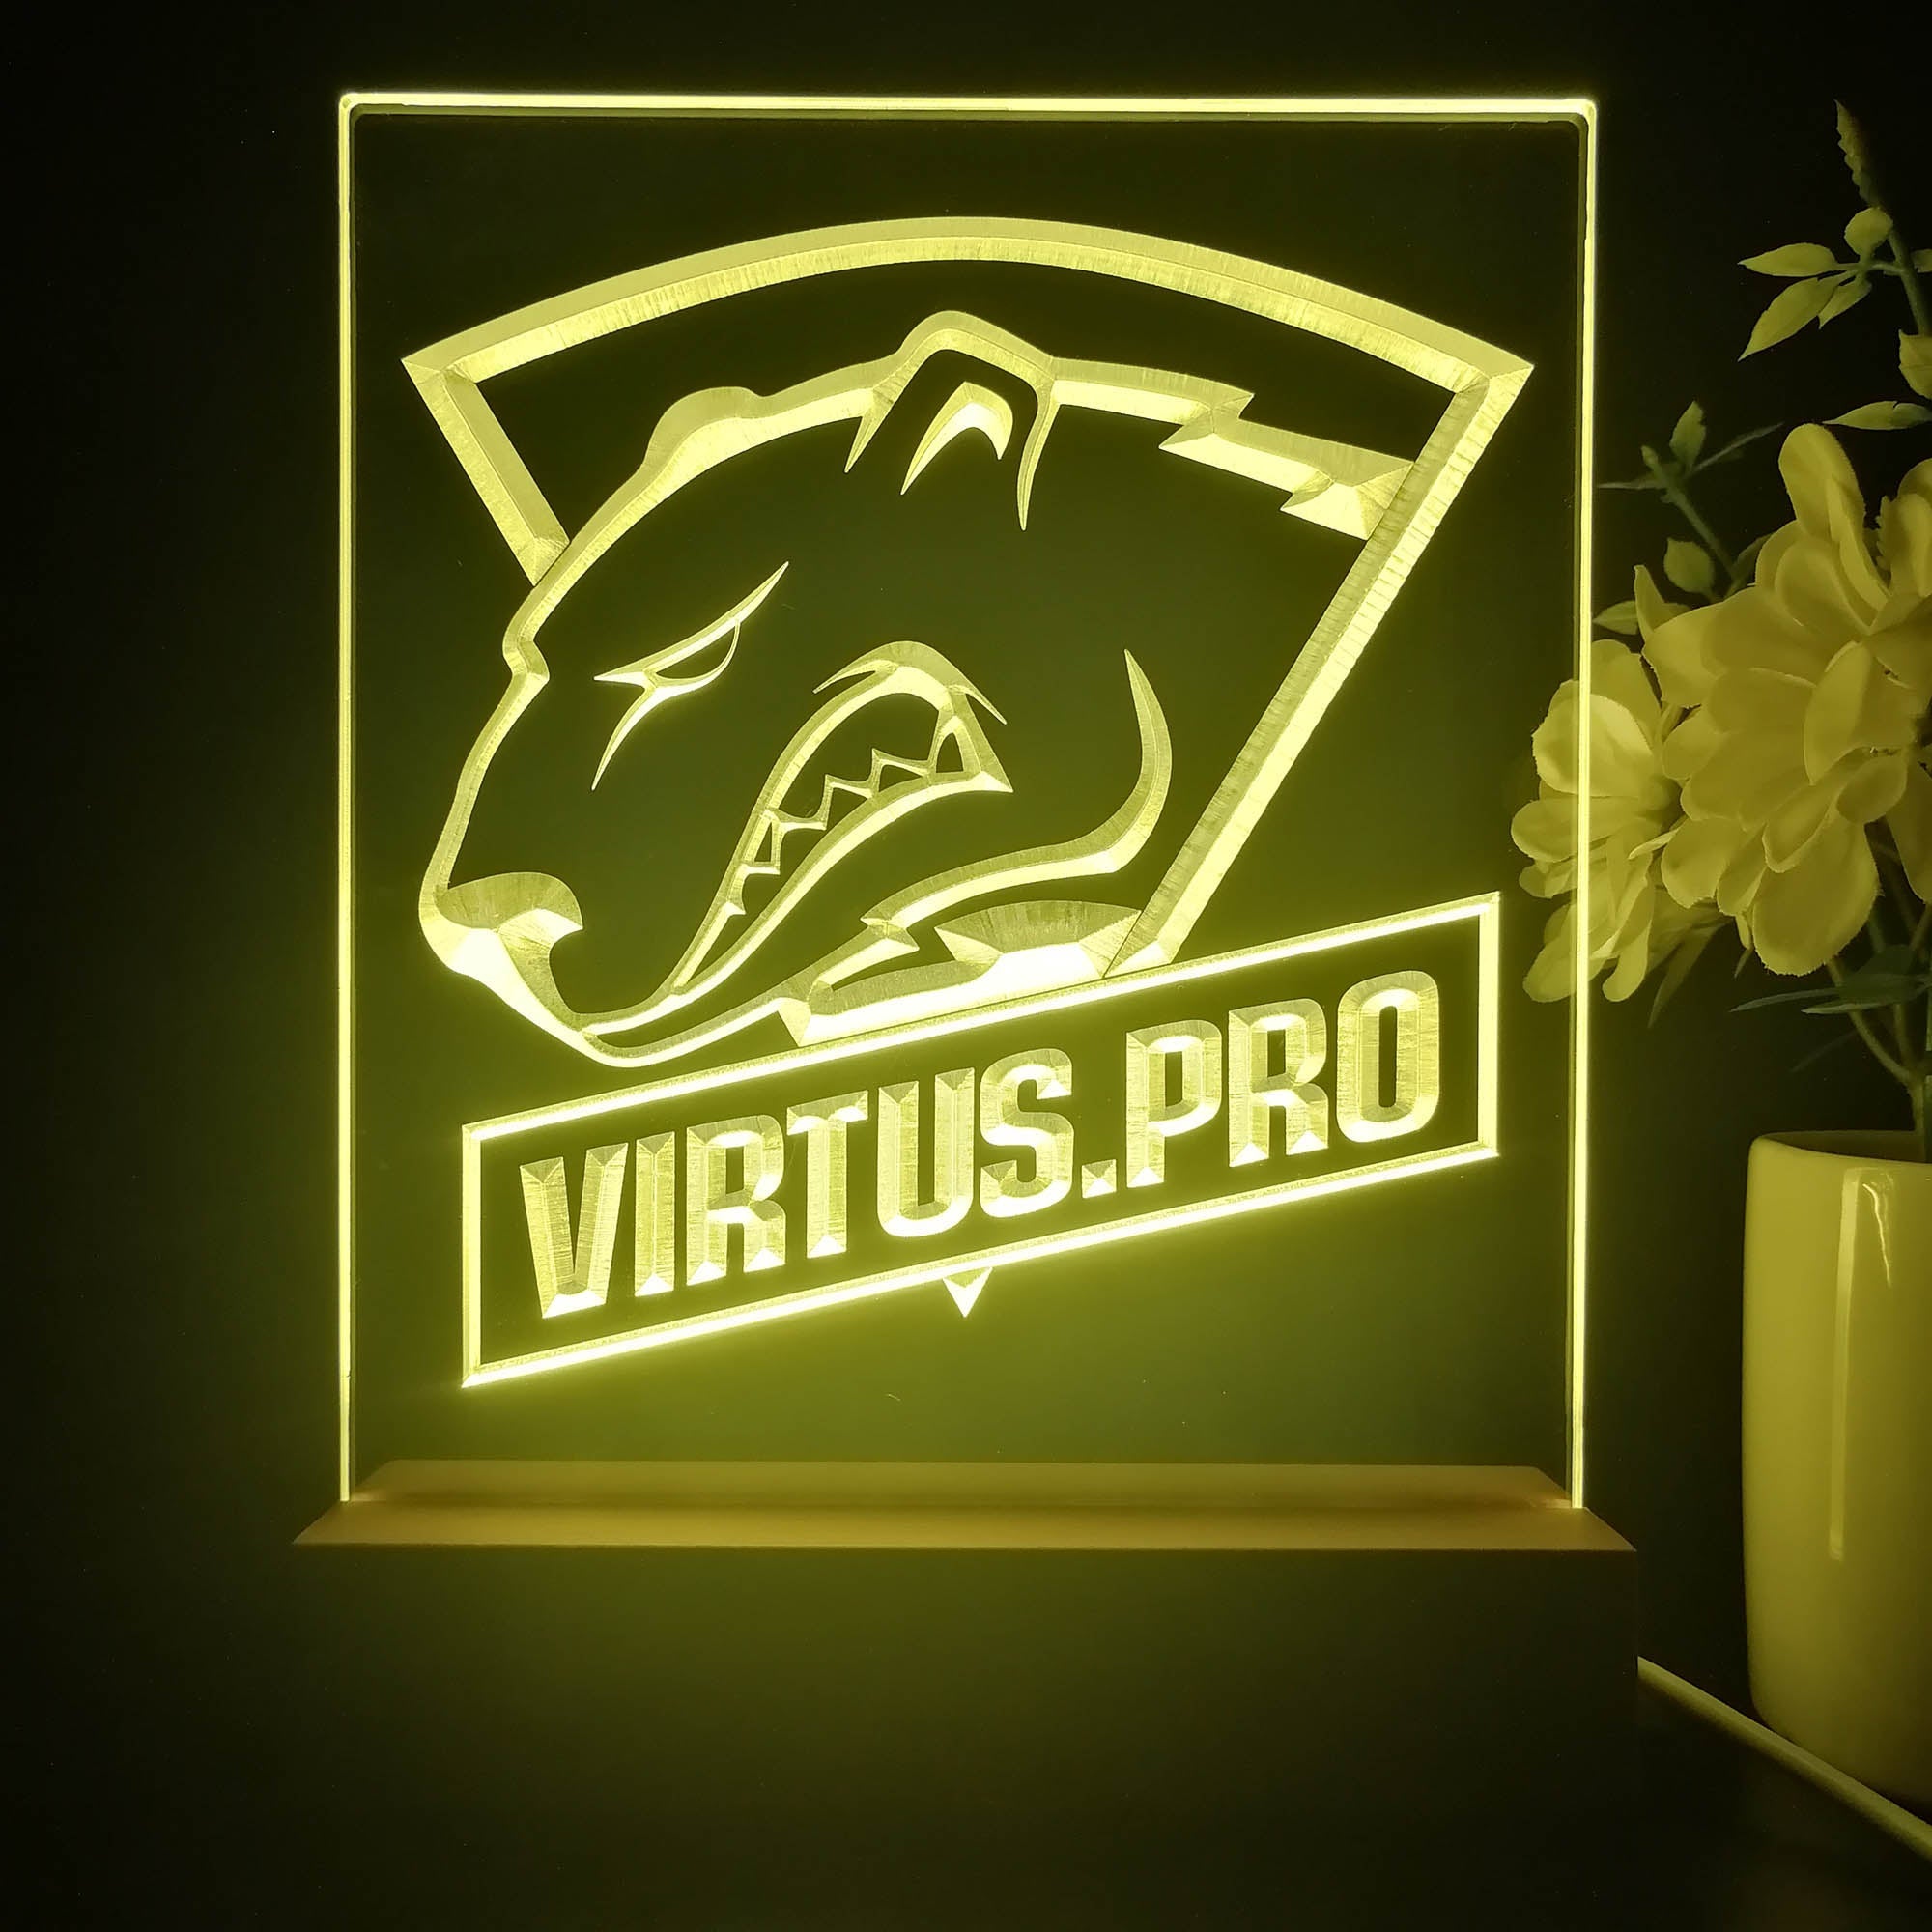 Virtus Pro 3D Illusion Night Light Desk Lamp